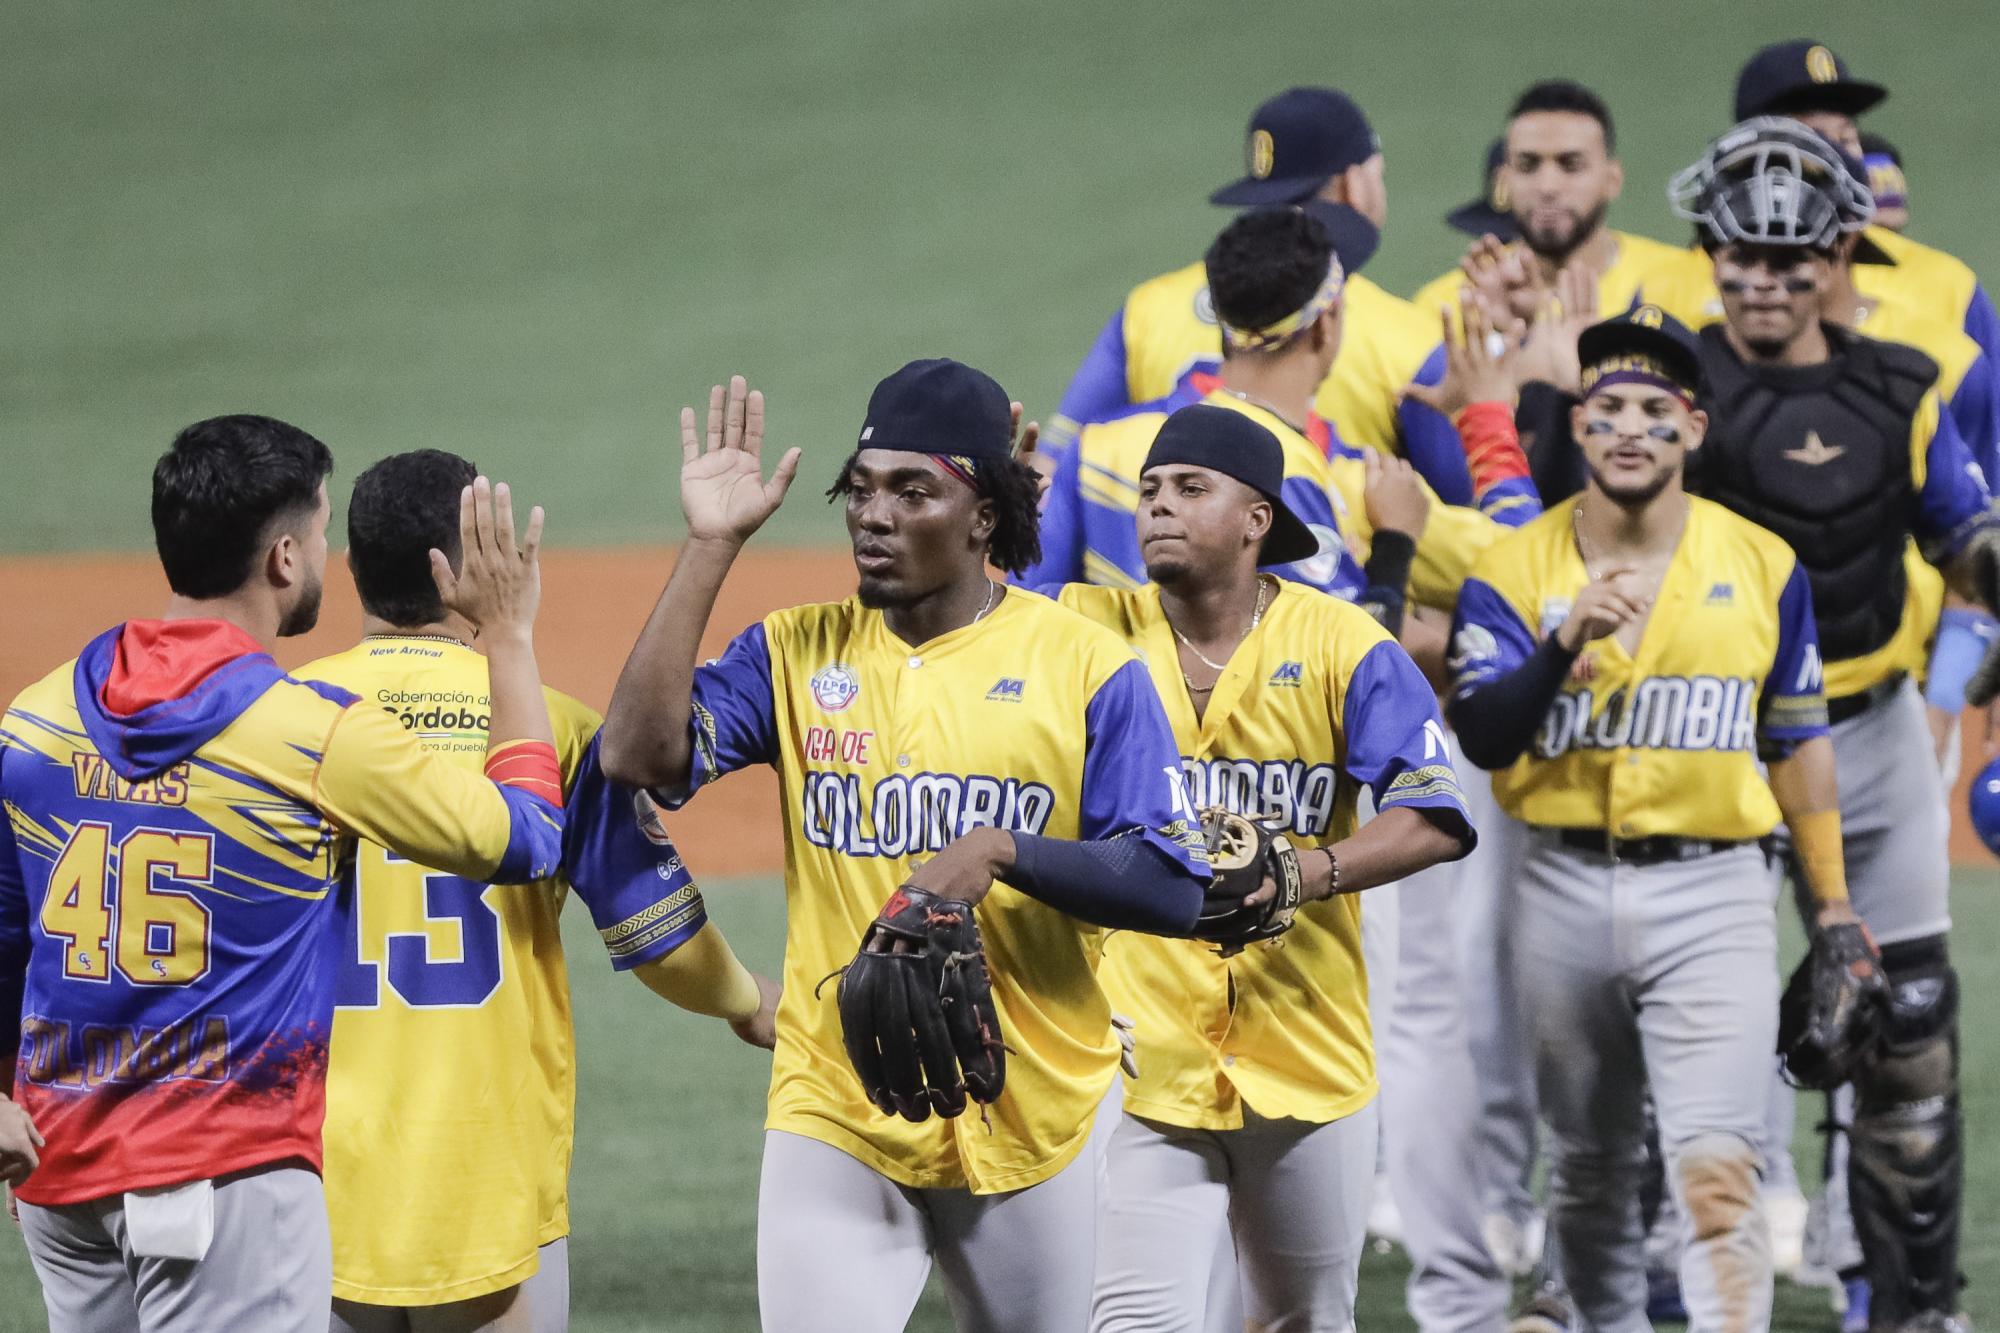 $!Eduard López luce para guiar a Colombia al triunfo sobre Dominicana en la Serie del Caribe